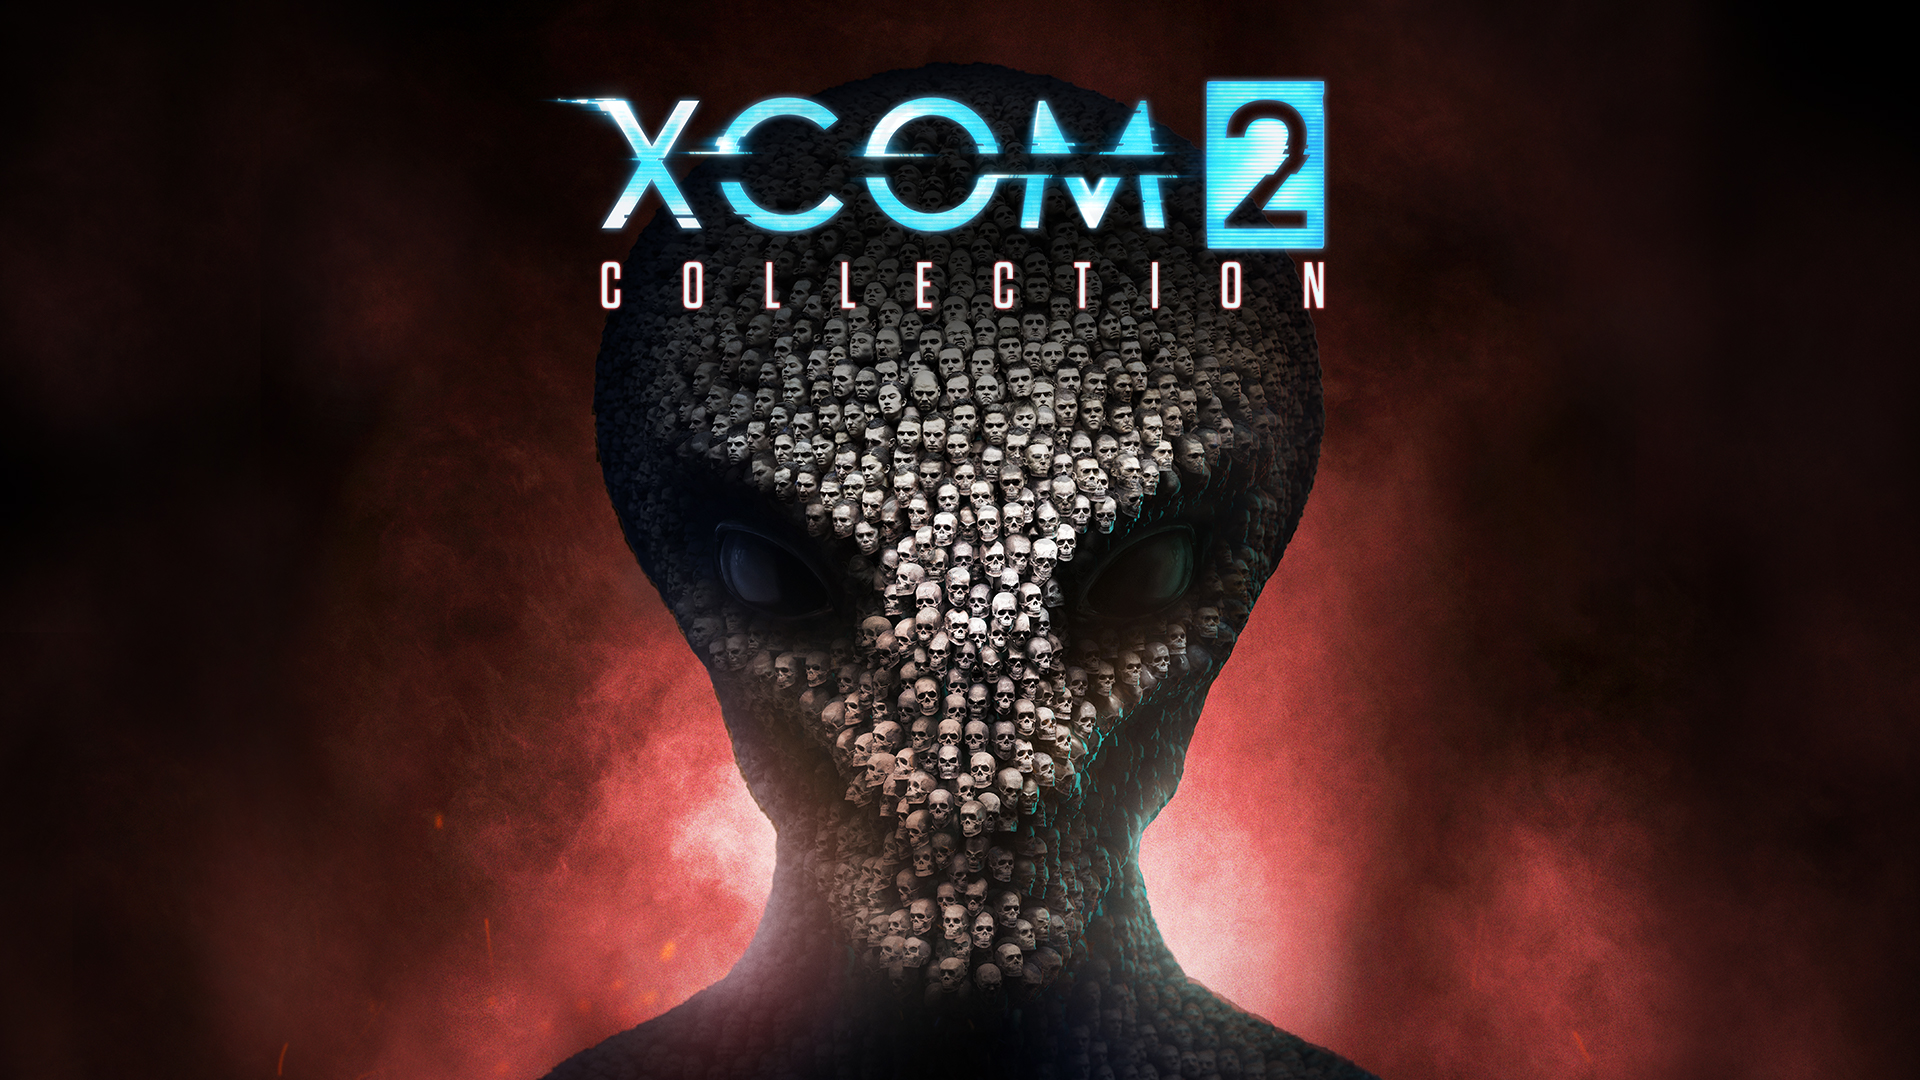 XCOM® 2 Collection for Nintendo Switch - Digital Version $12.49 $12.49